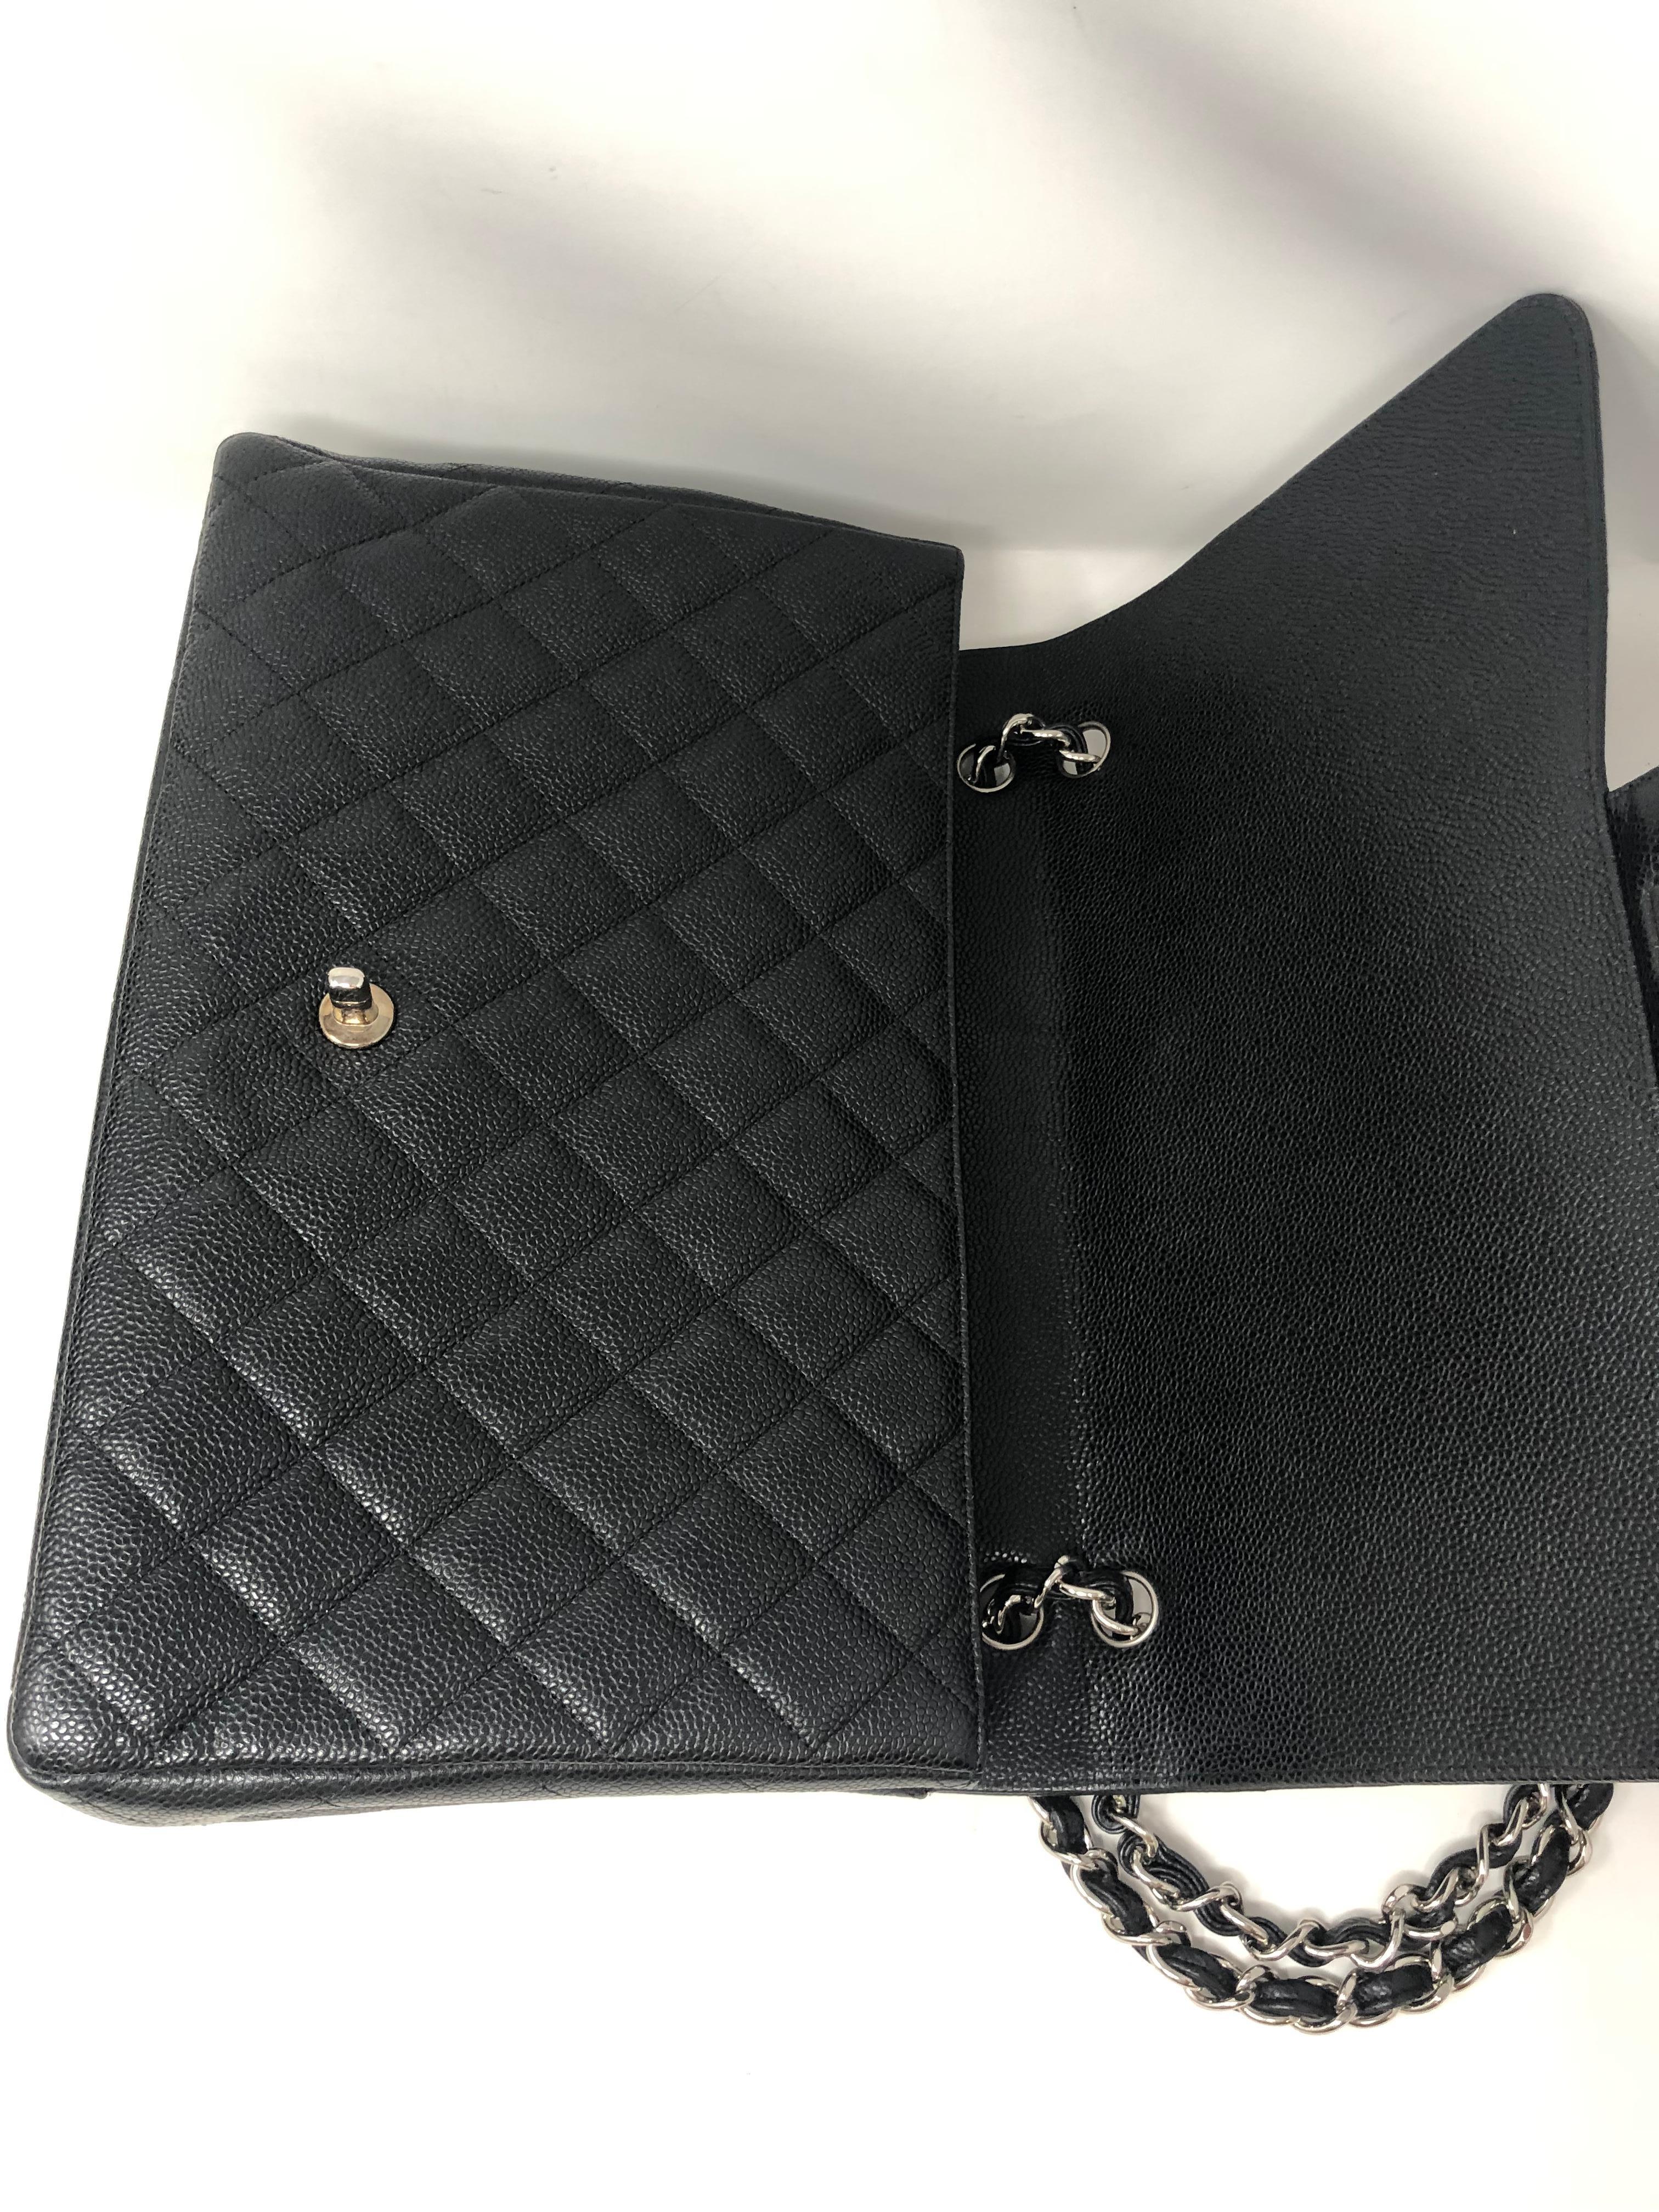 Chanel Black Caviar Leather Maxi Bag 4